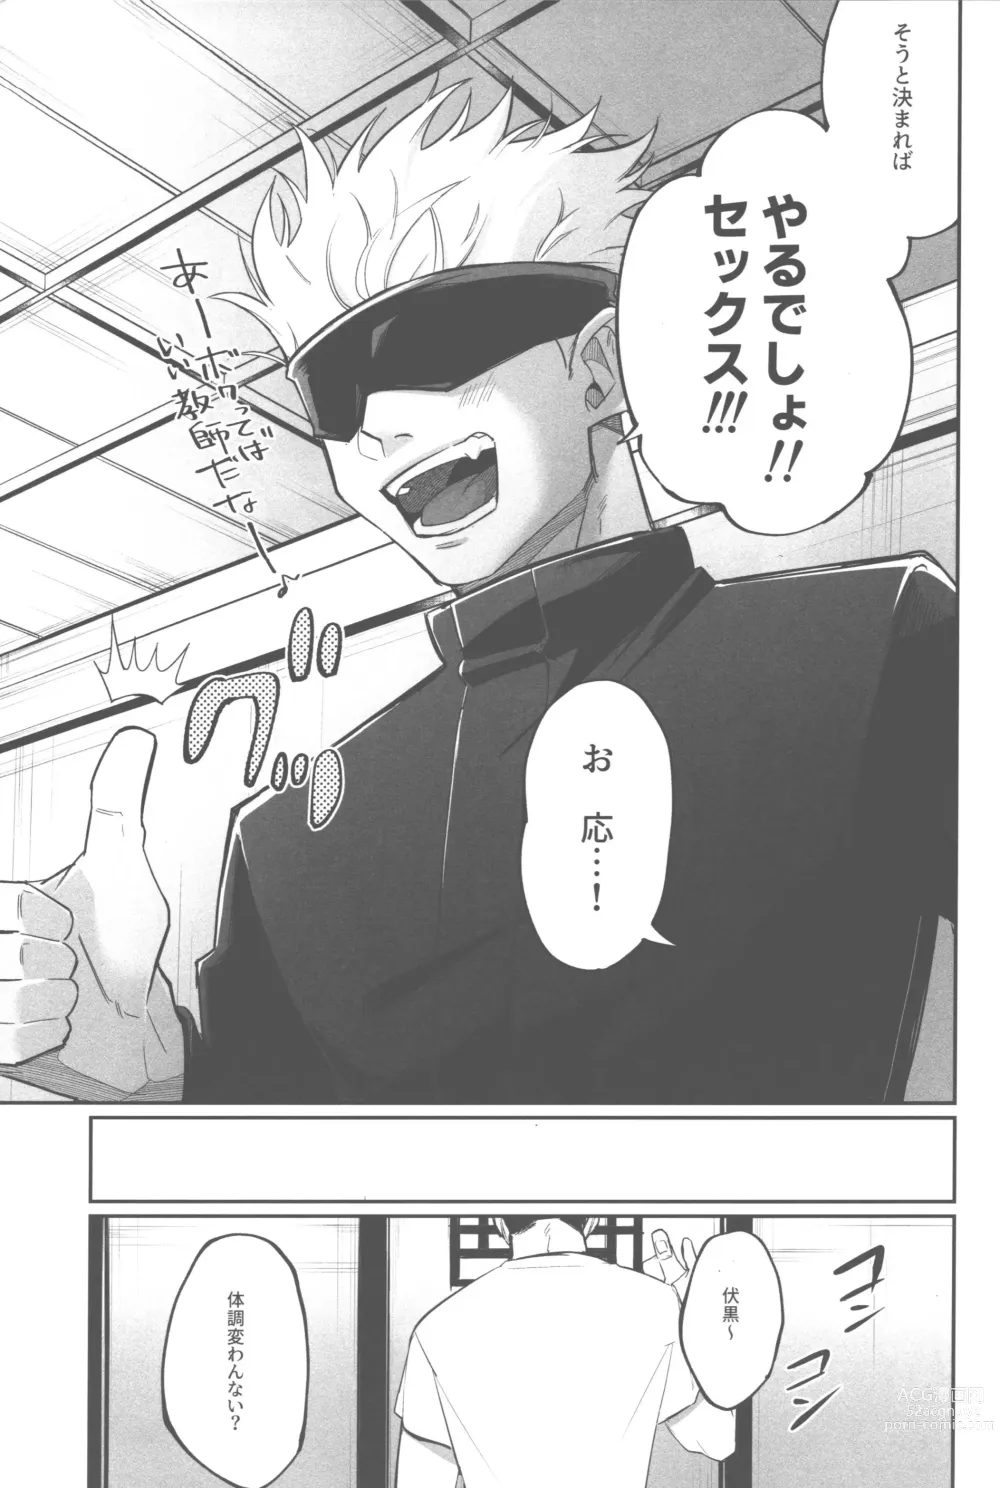 Page 6 of doujinshi Mune no Uchi Seiippai